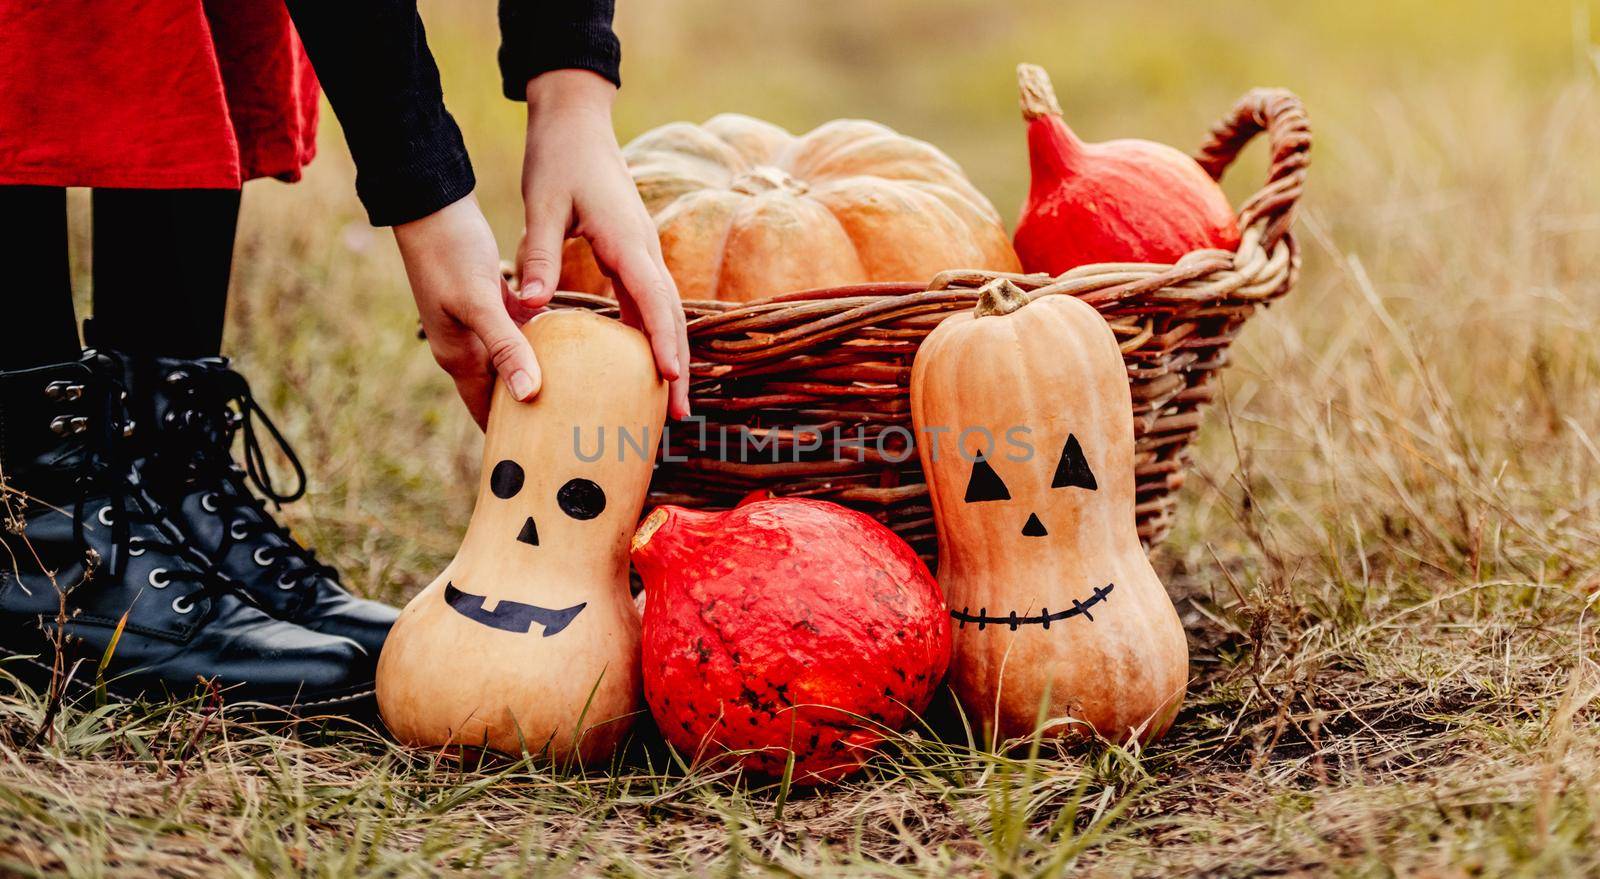 Pumpkins and basket standing at girls feet by tan4ikk1